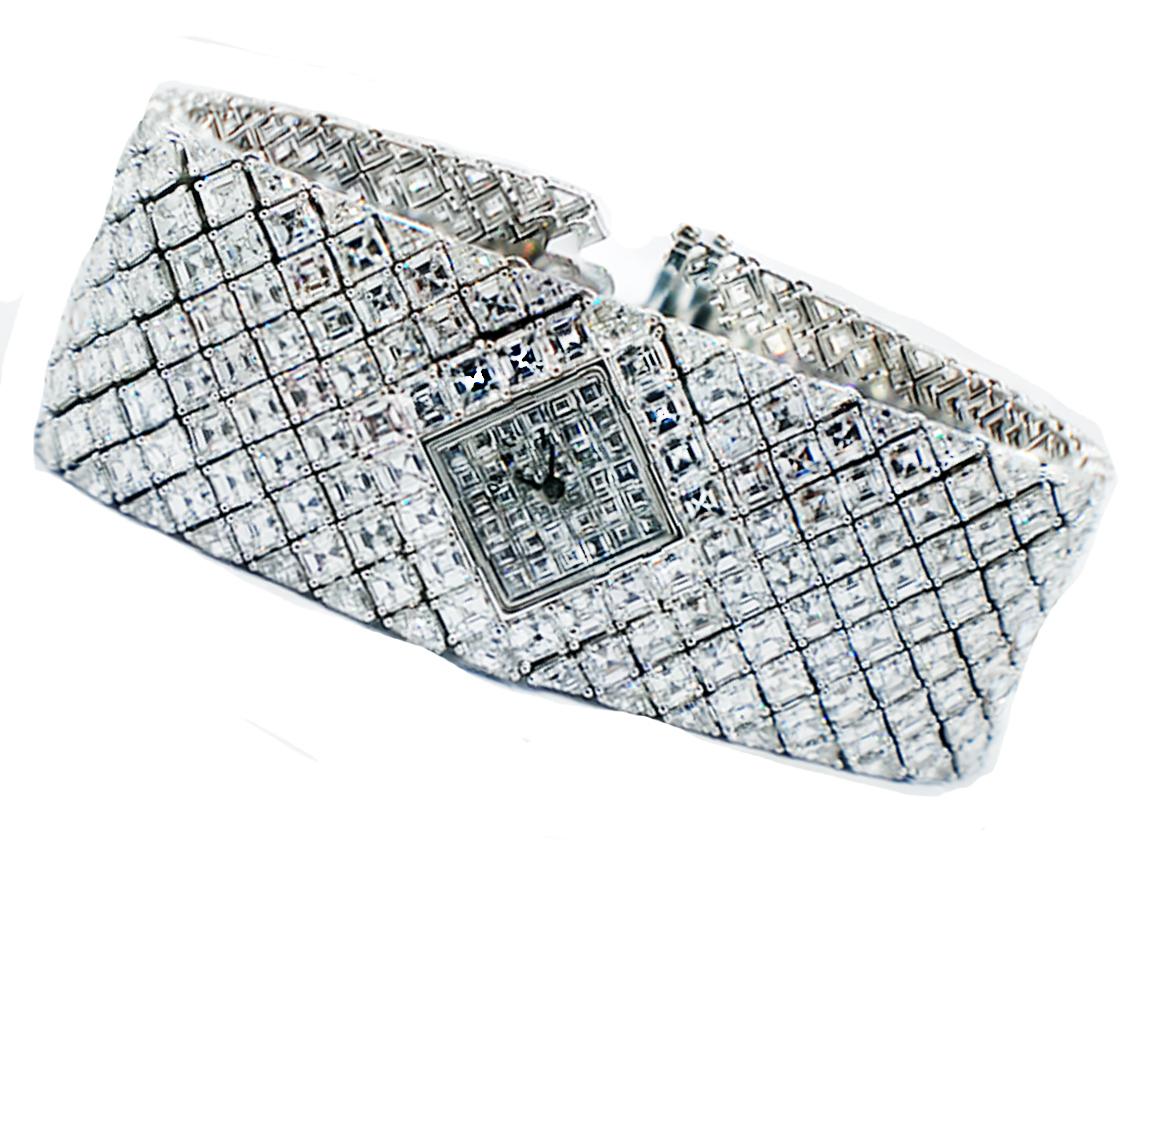 Jacob & Co Infinity Diamond Ladies Watch 50 Carat VS1 E-F Endless Bracelet